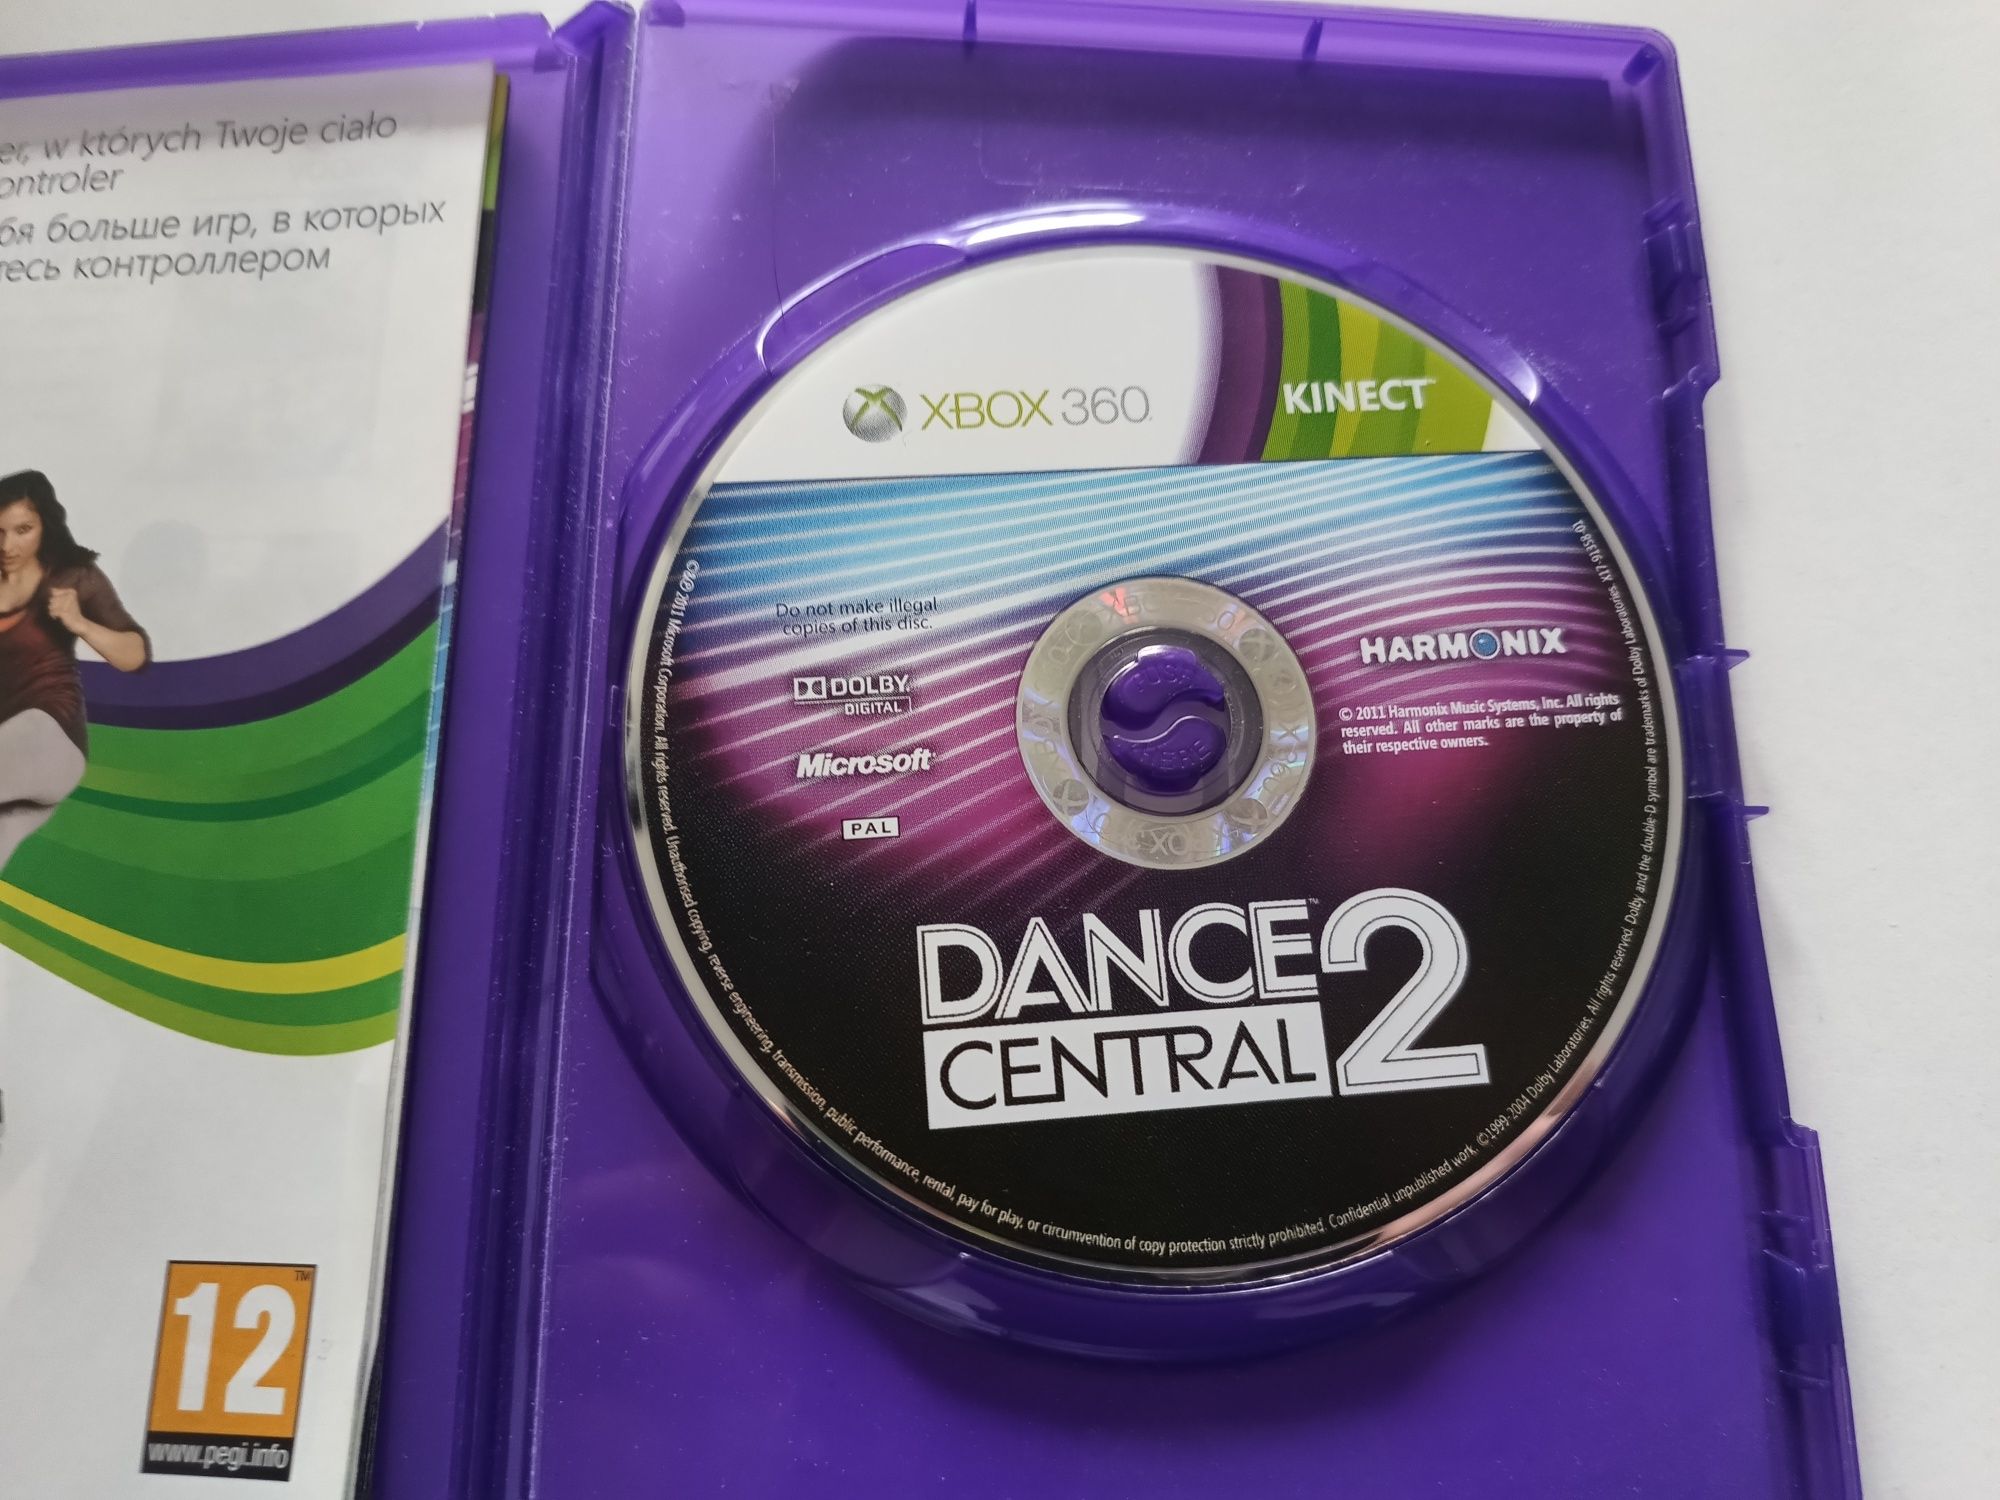 Gra Xbox 360 Kinect Dance Central 2 - Polska wersja